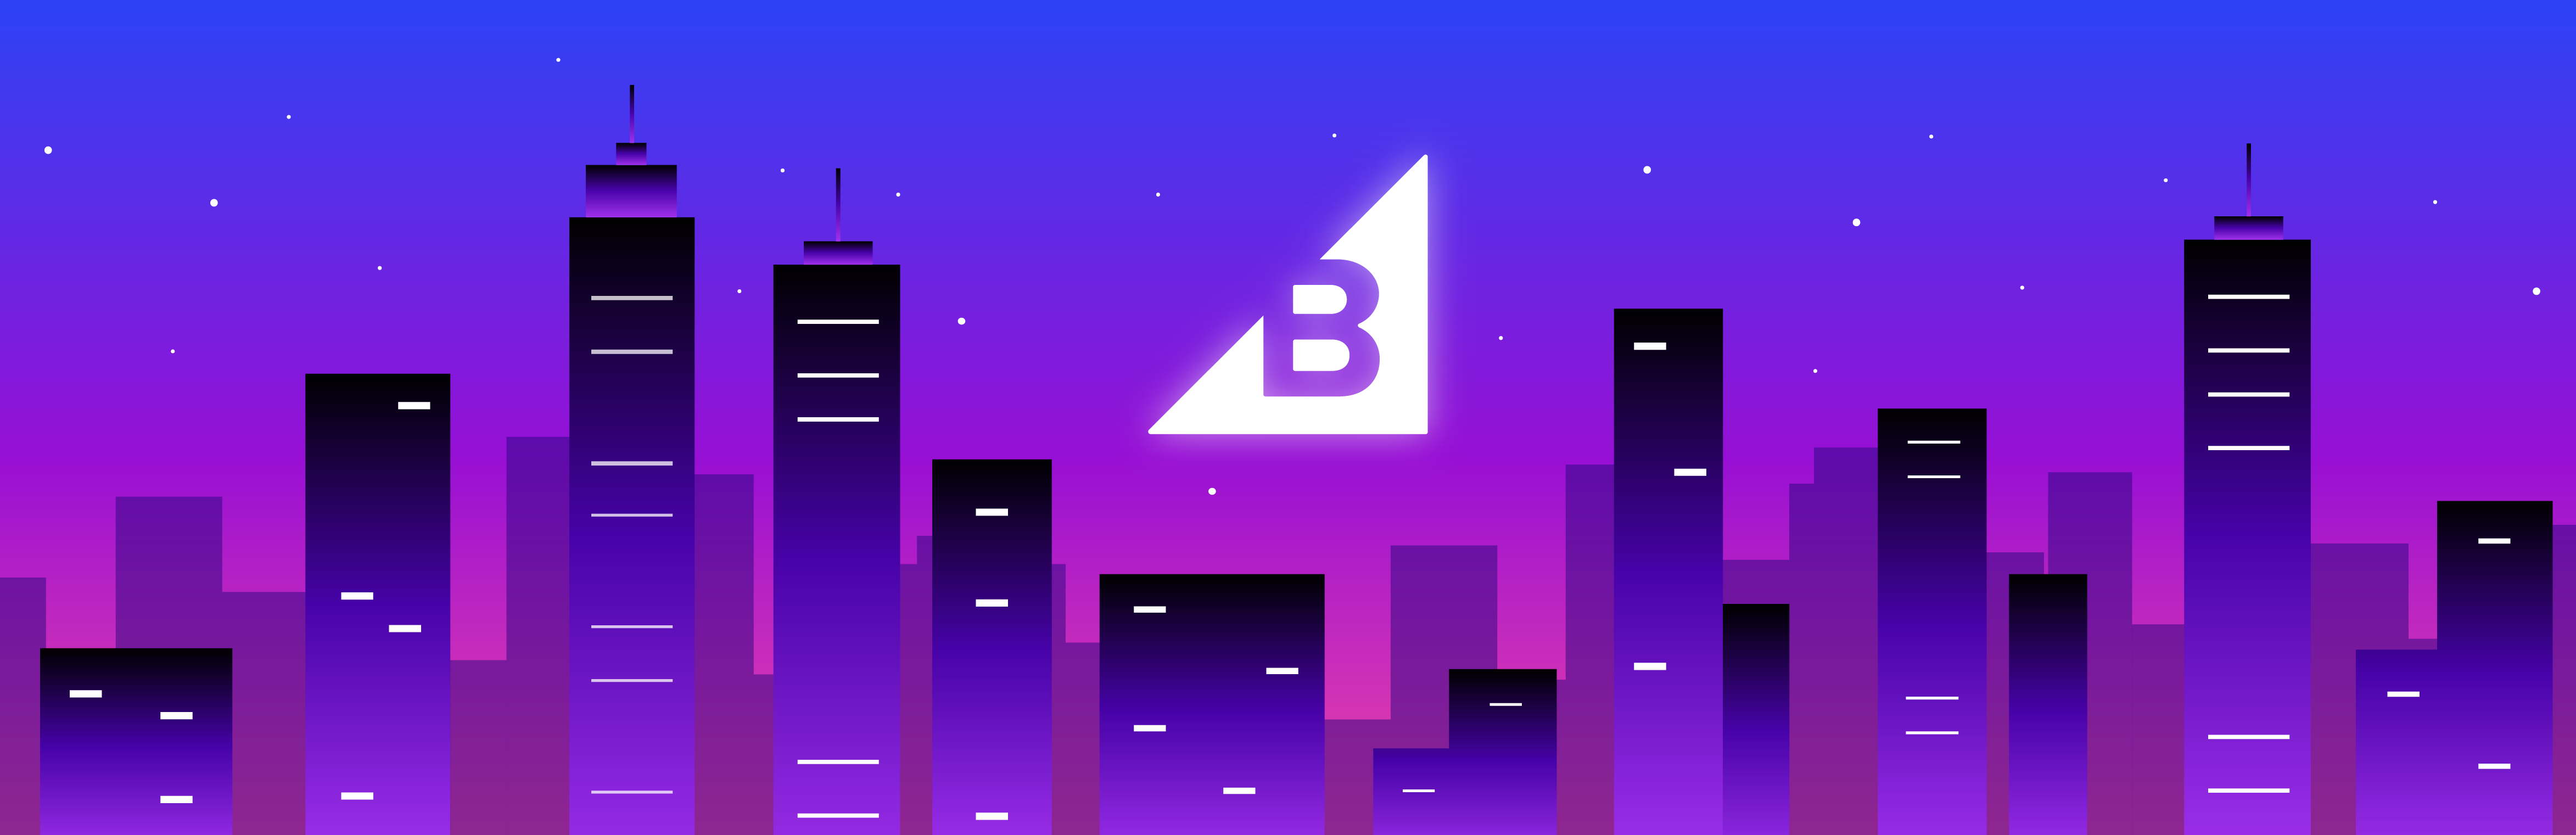 B2b2 ecommerce platforms header